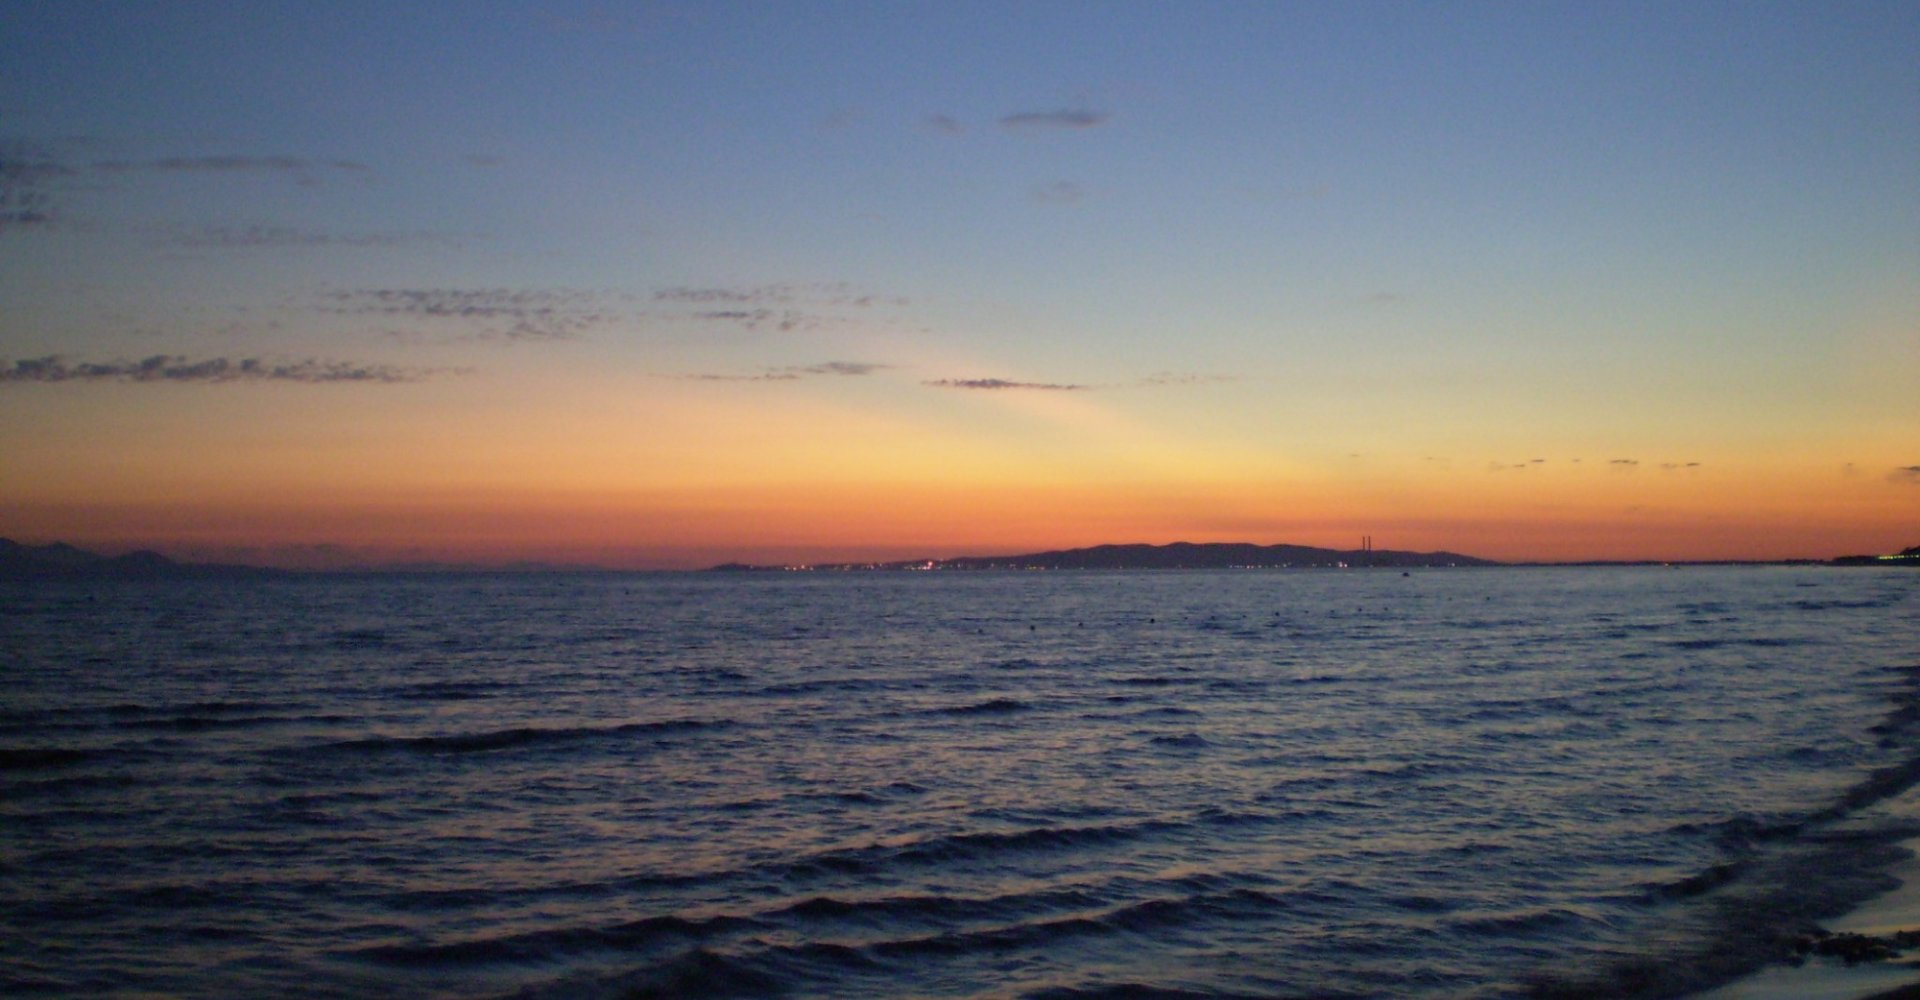 Sunset at the Pratoranieri beach in Follonica